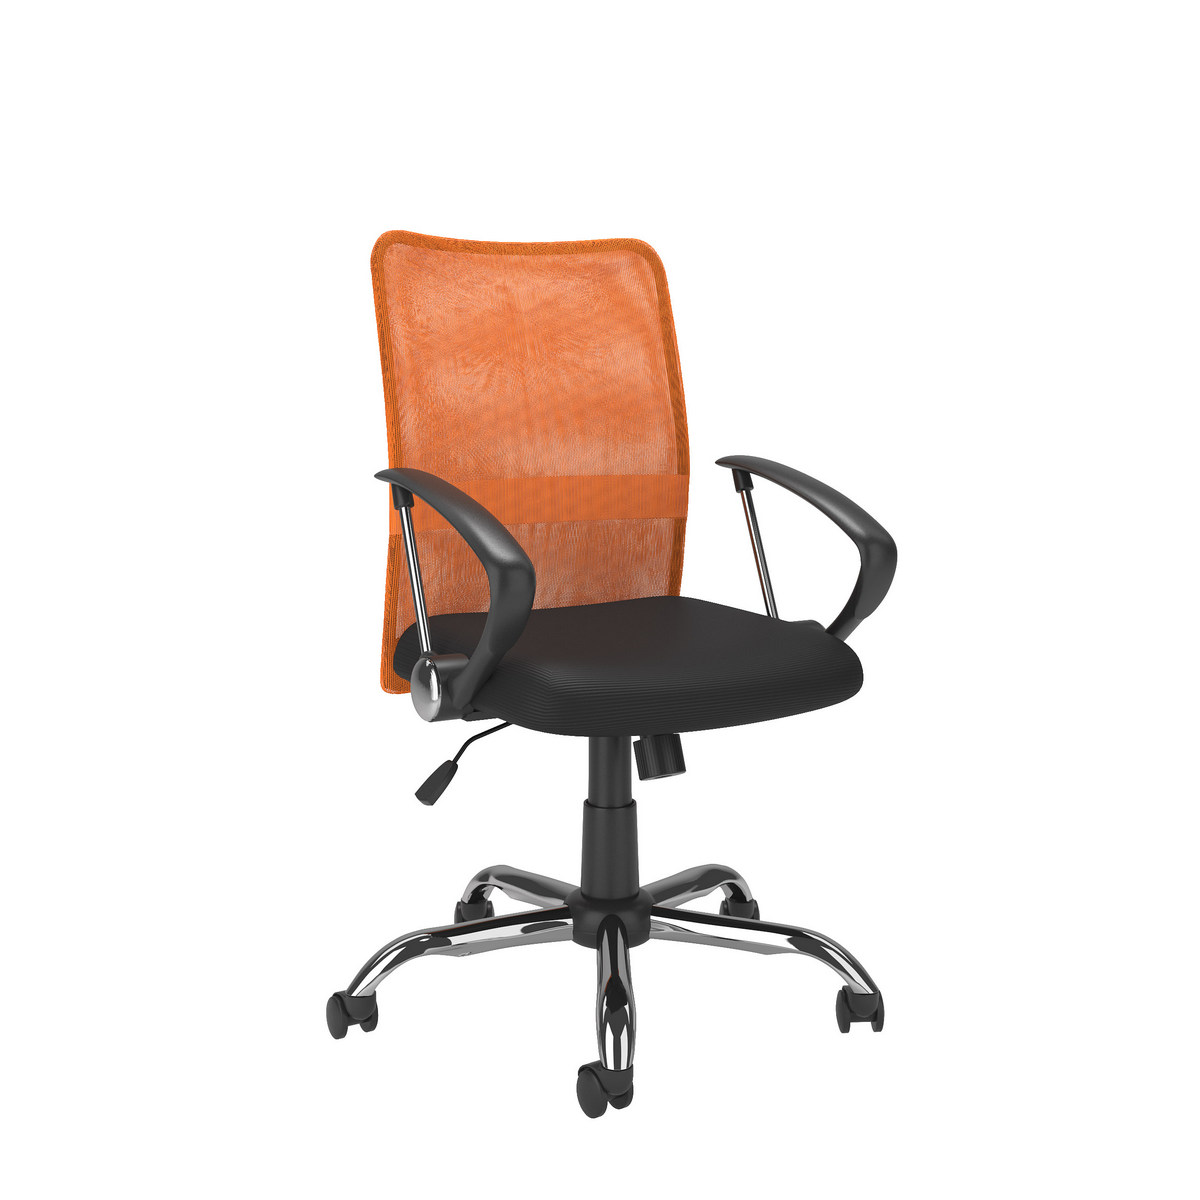 Corliving Whl-725-c Workspace Office Chair W/ Contoured Orange Mesh Back